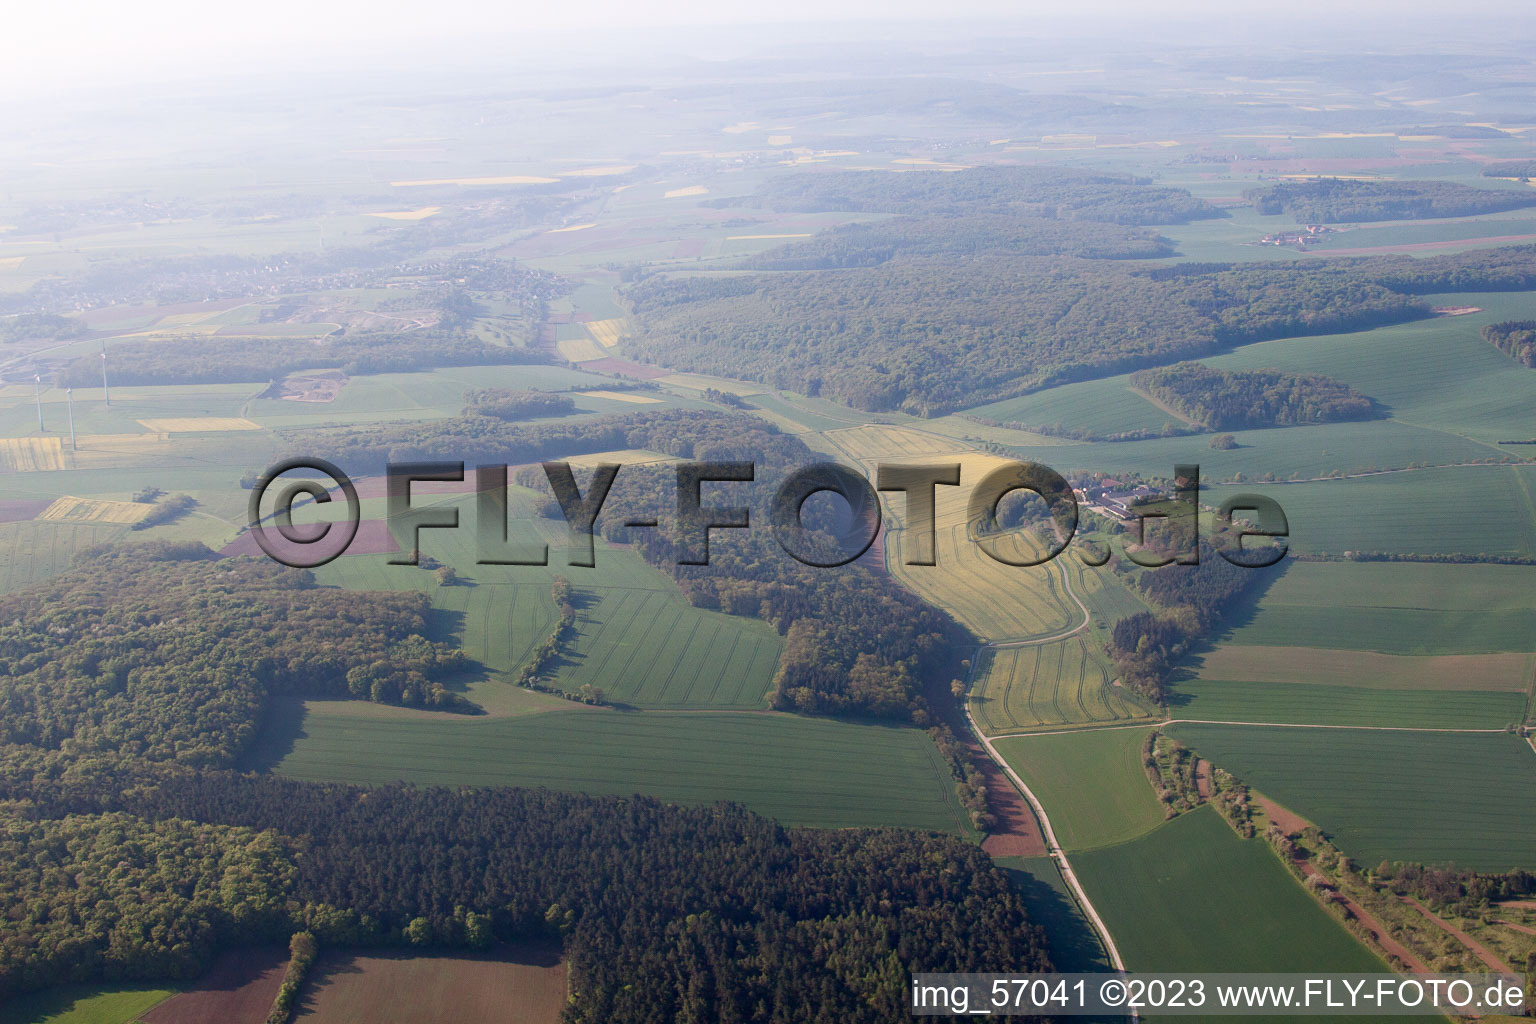 Aerial view of Kleinrinderfeld in the state Bavaria, Germany